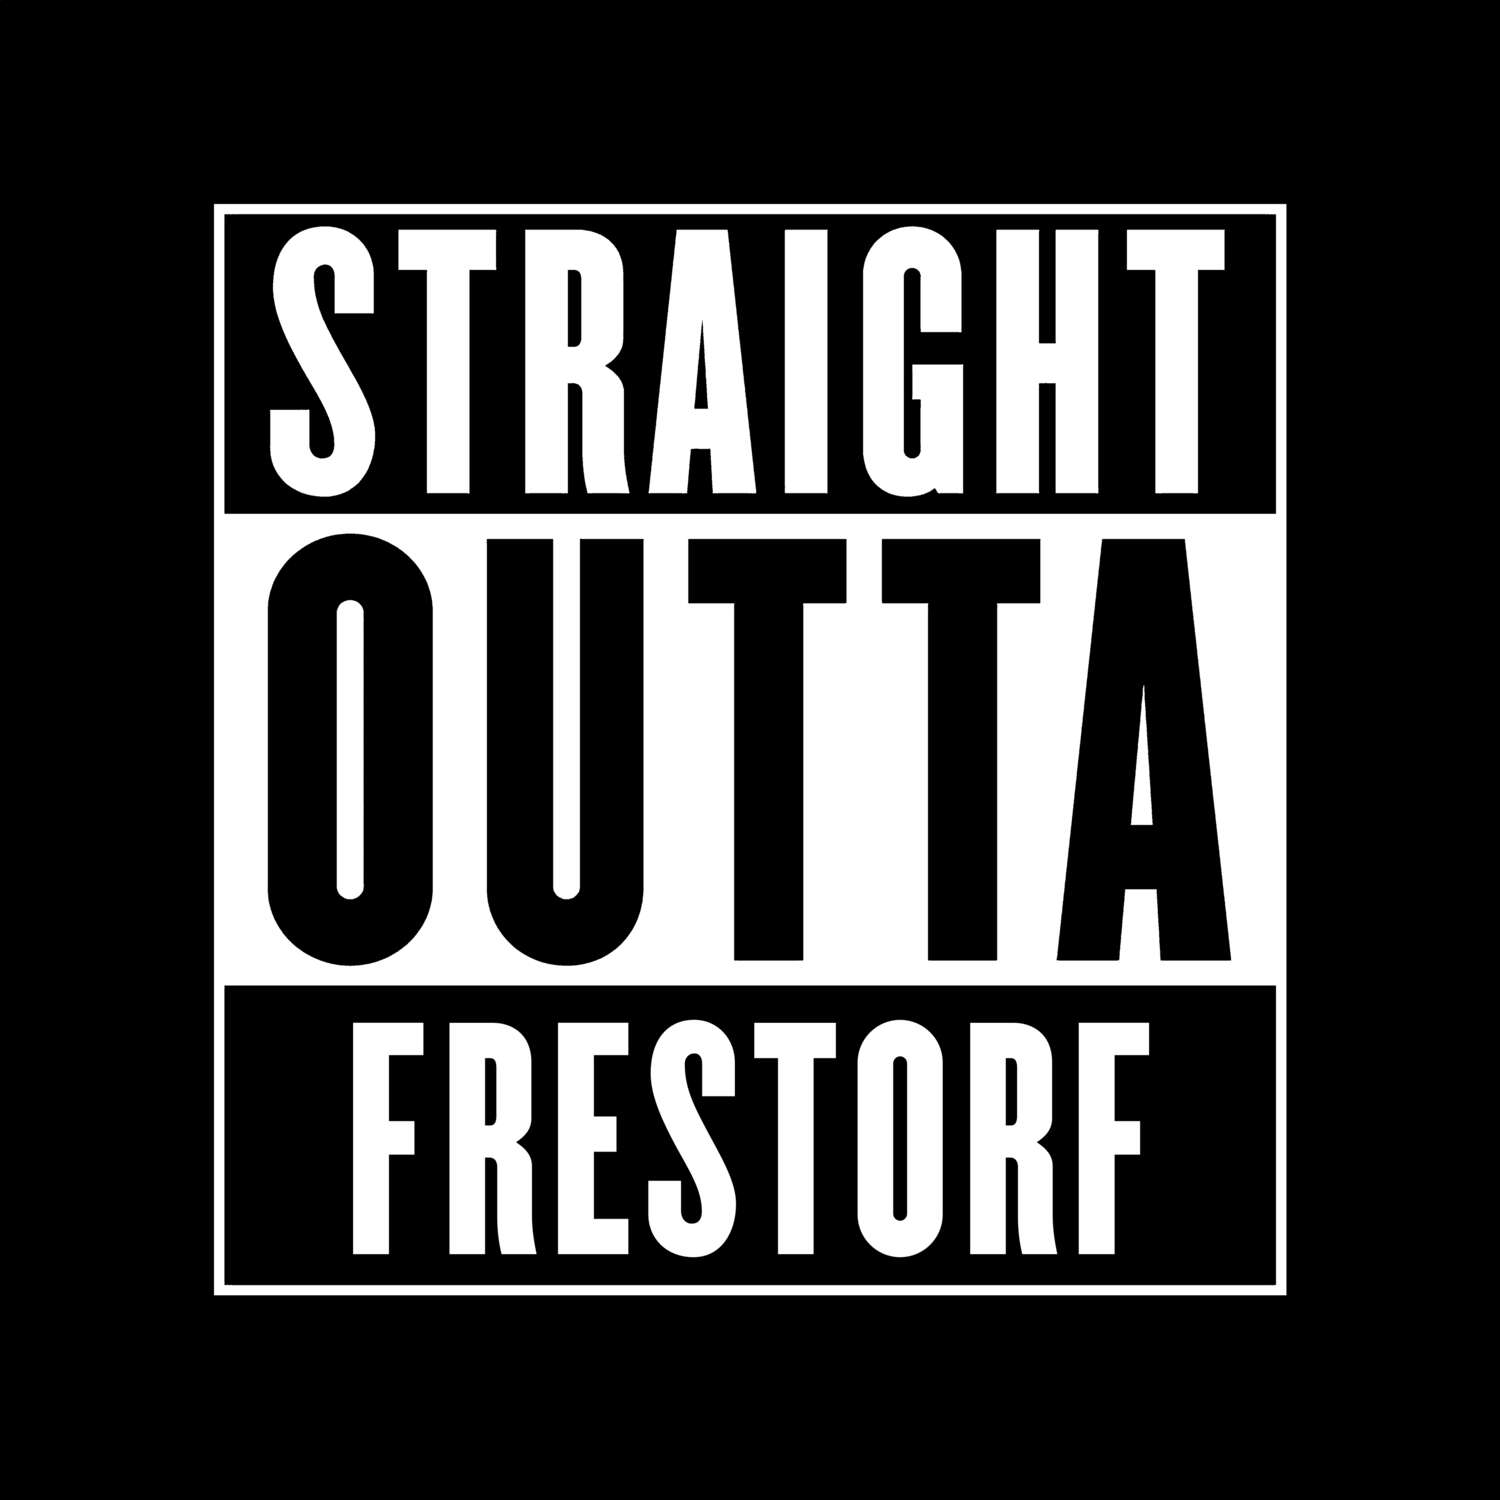 Frestorf T-Shirt »Straight Outta«